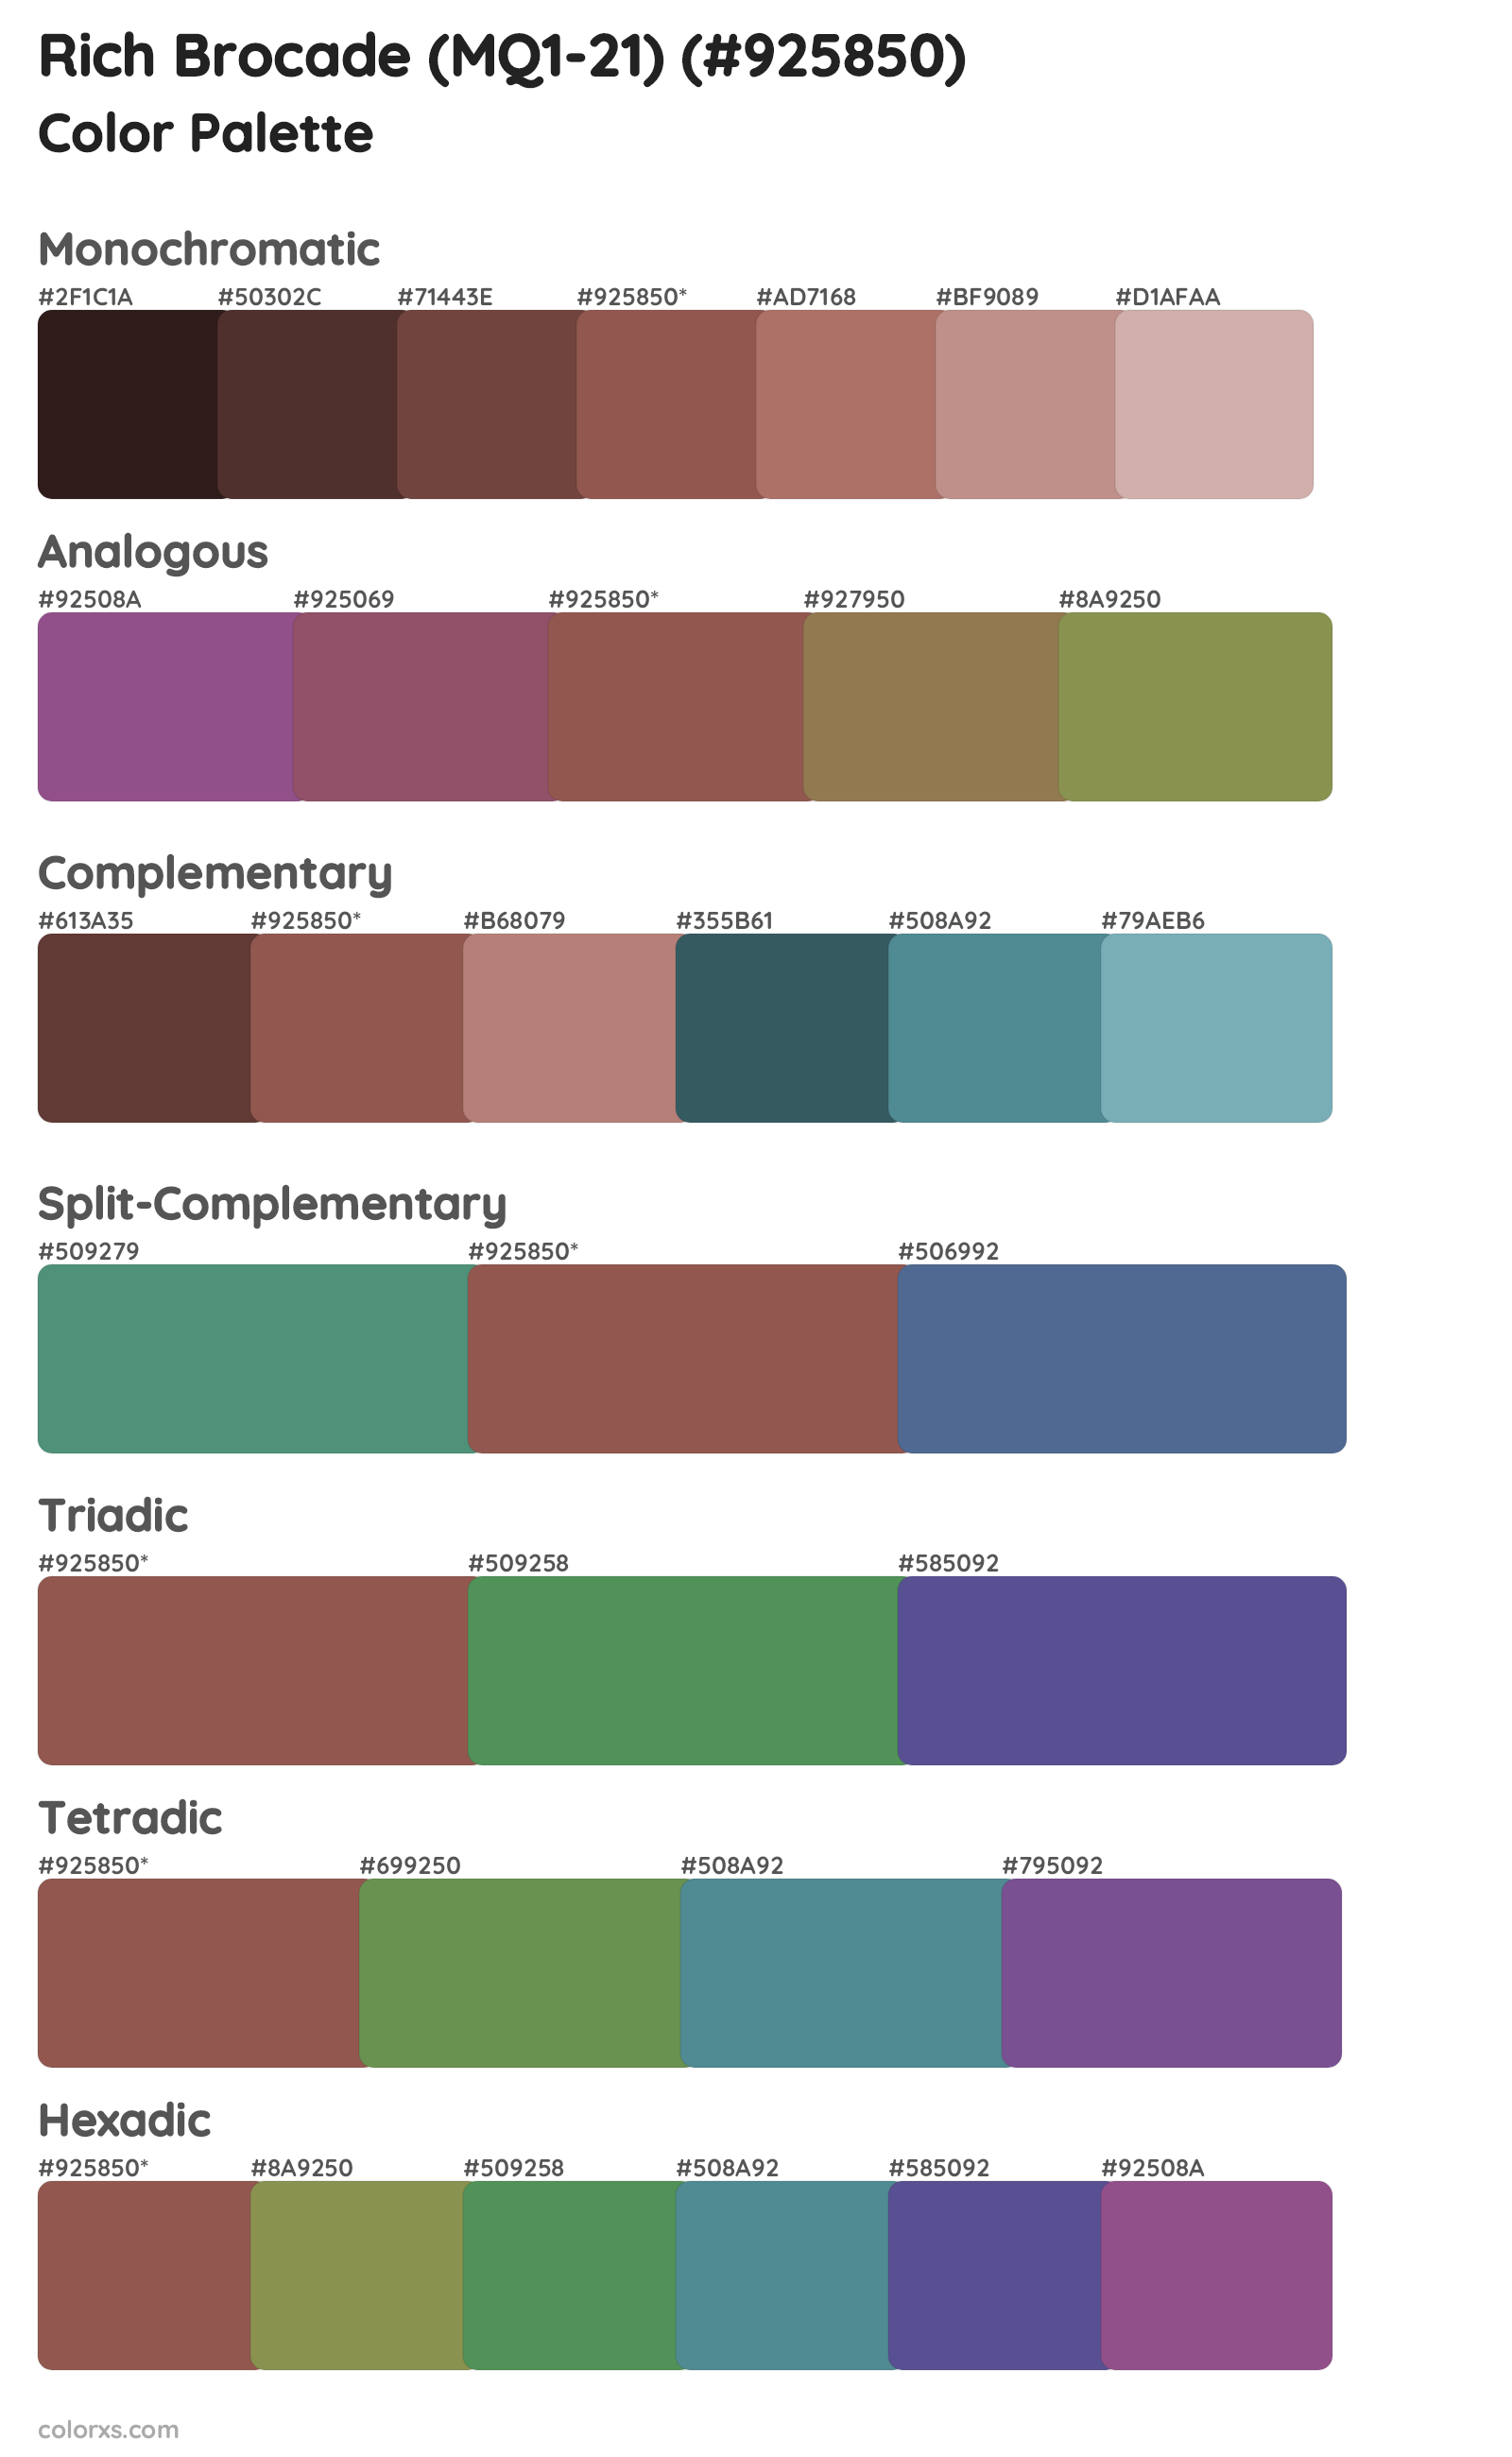 Rich Brocade (MQ1-21) Color Scheme Palettes